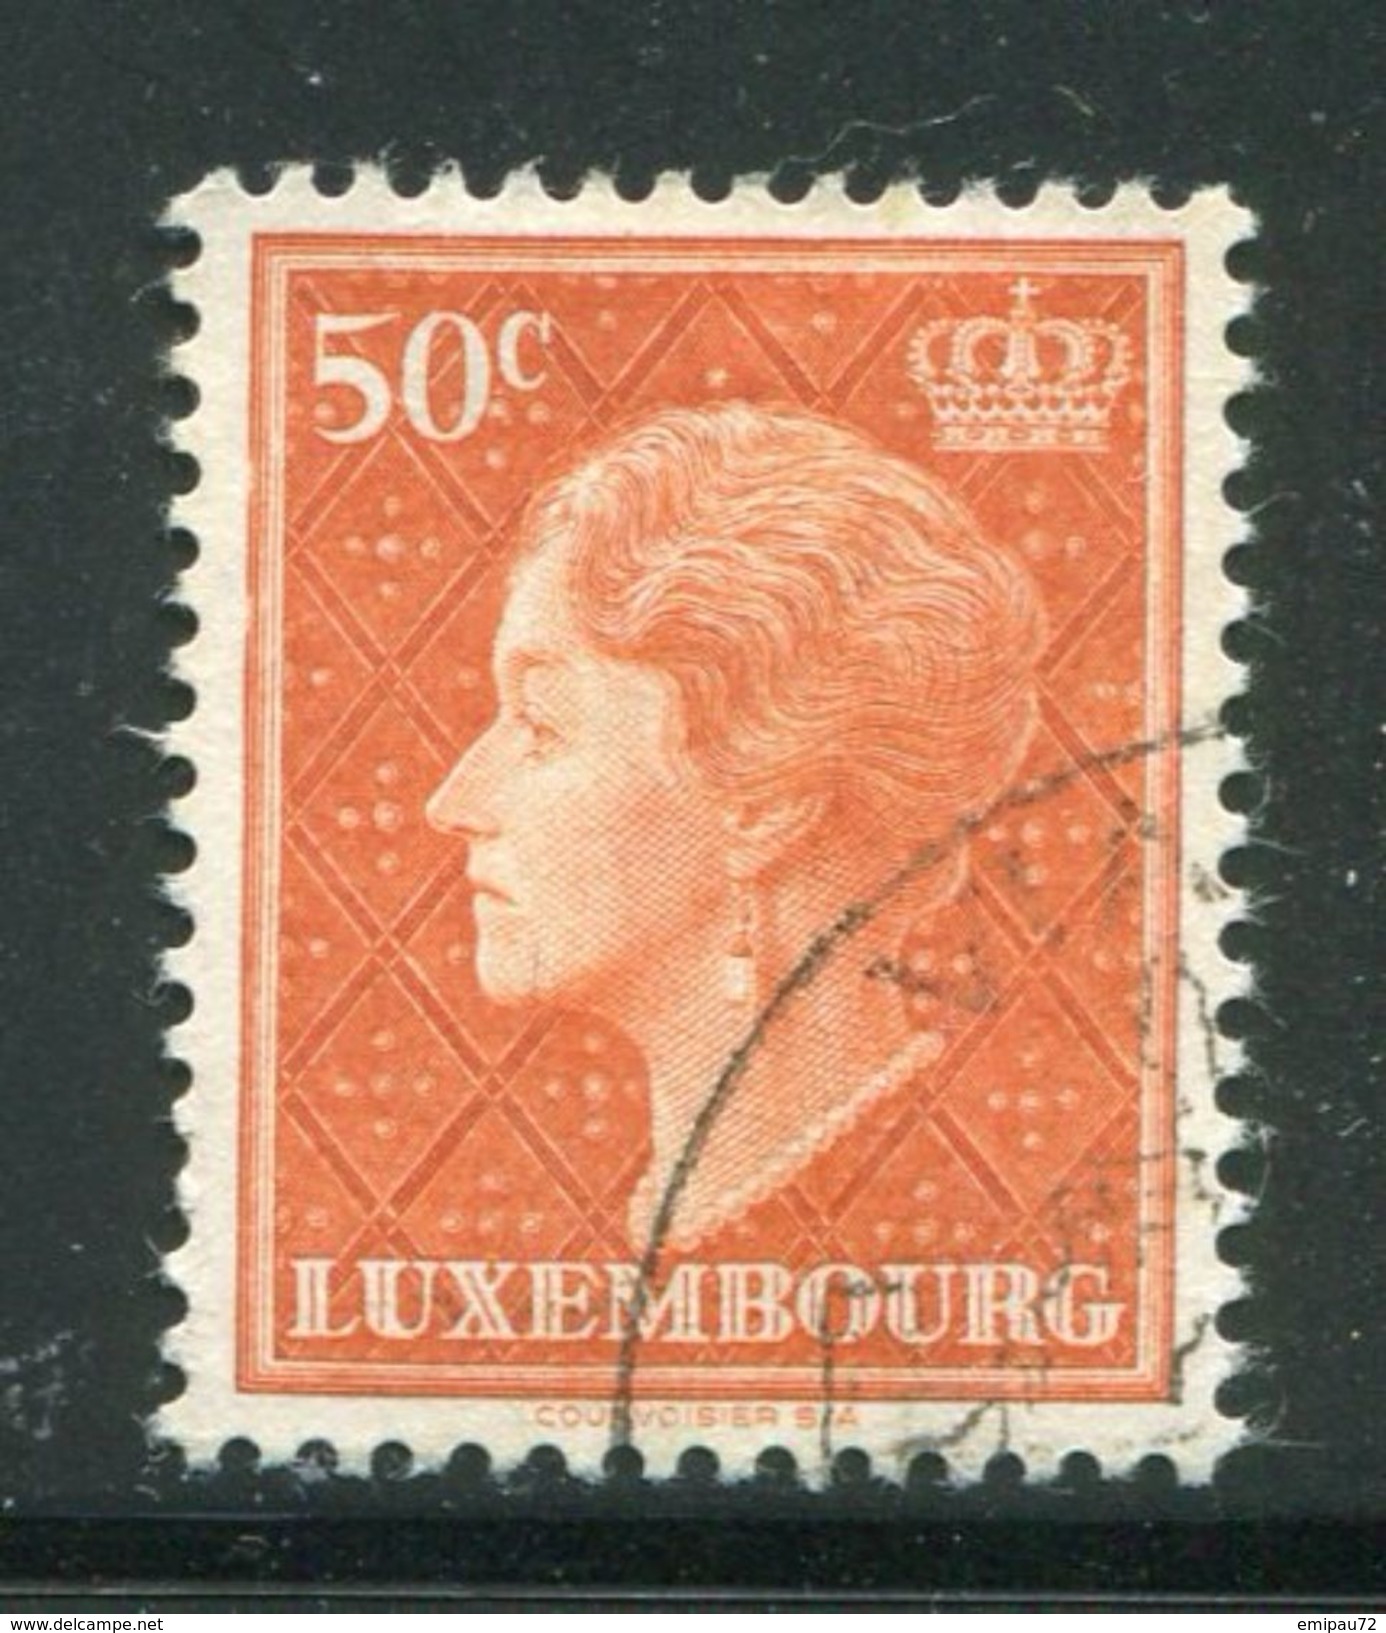 LUXEMBOURG- Y&T N°546- Oblitéré - 1948-58 Charlotte Left-hand Side